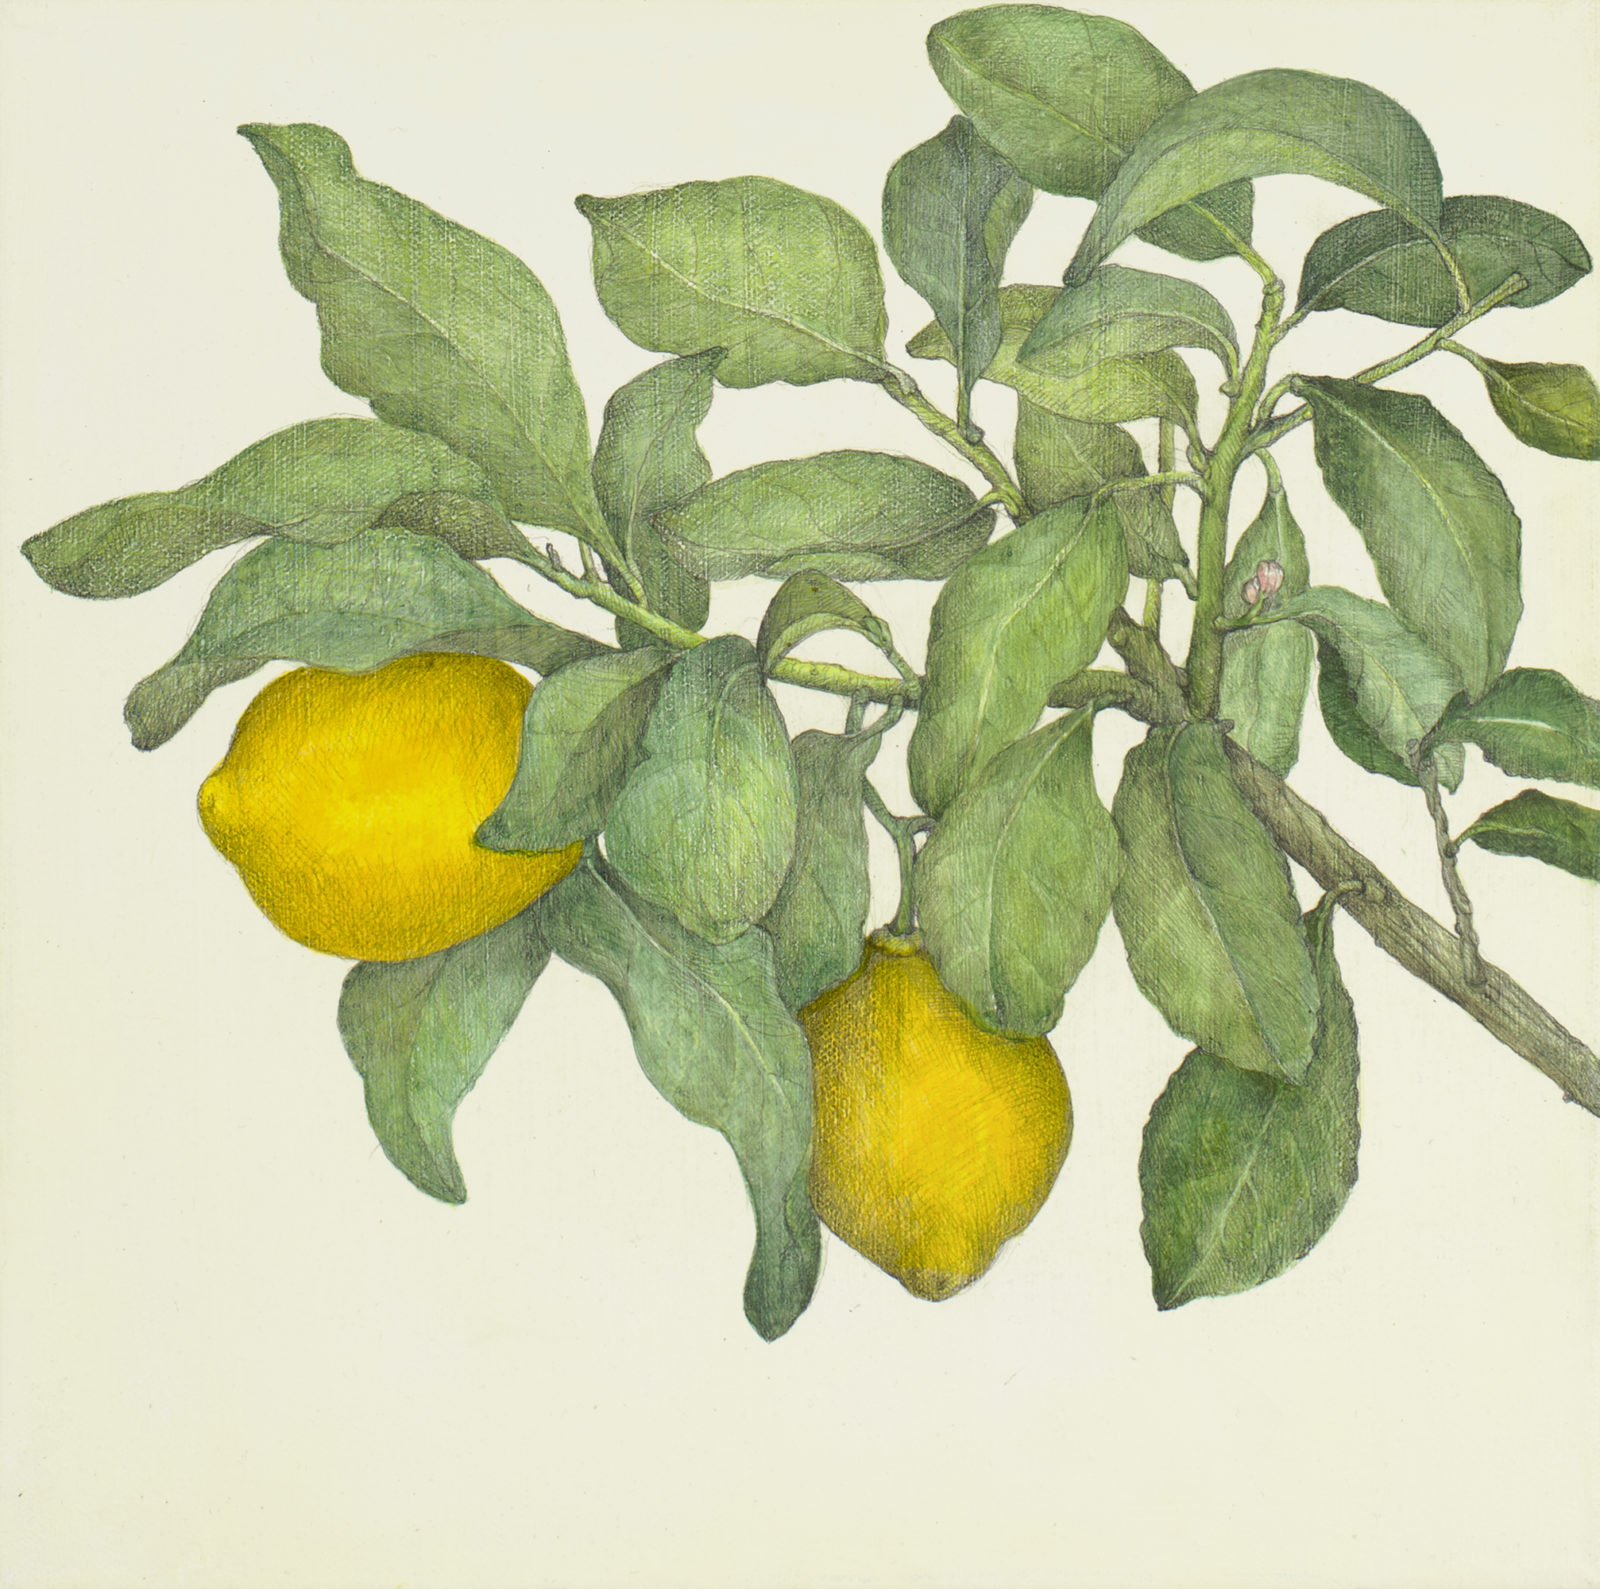 Lemon cadmium + Two lemons